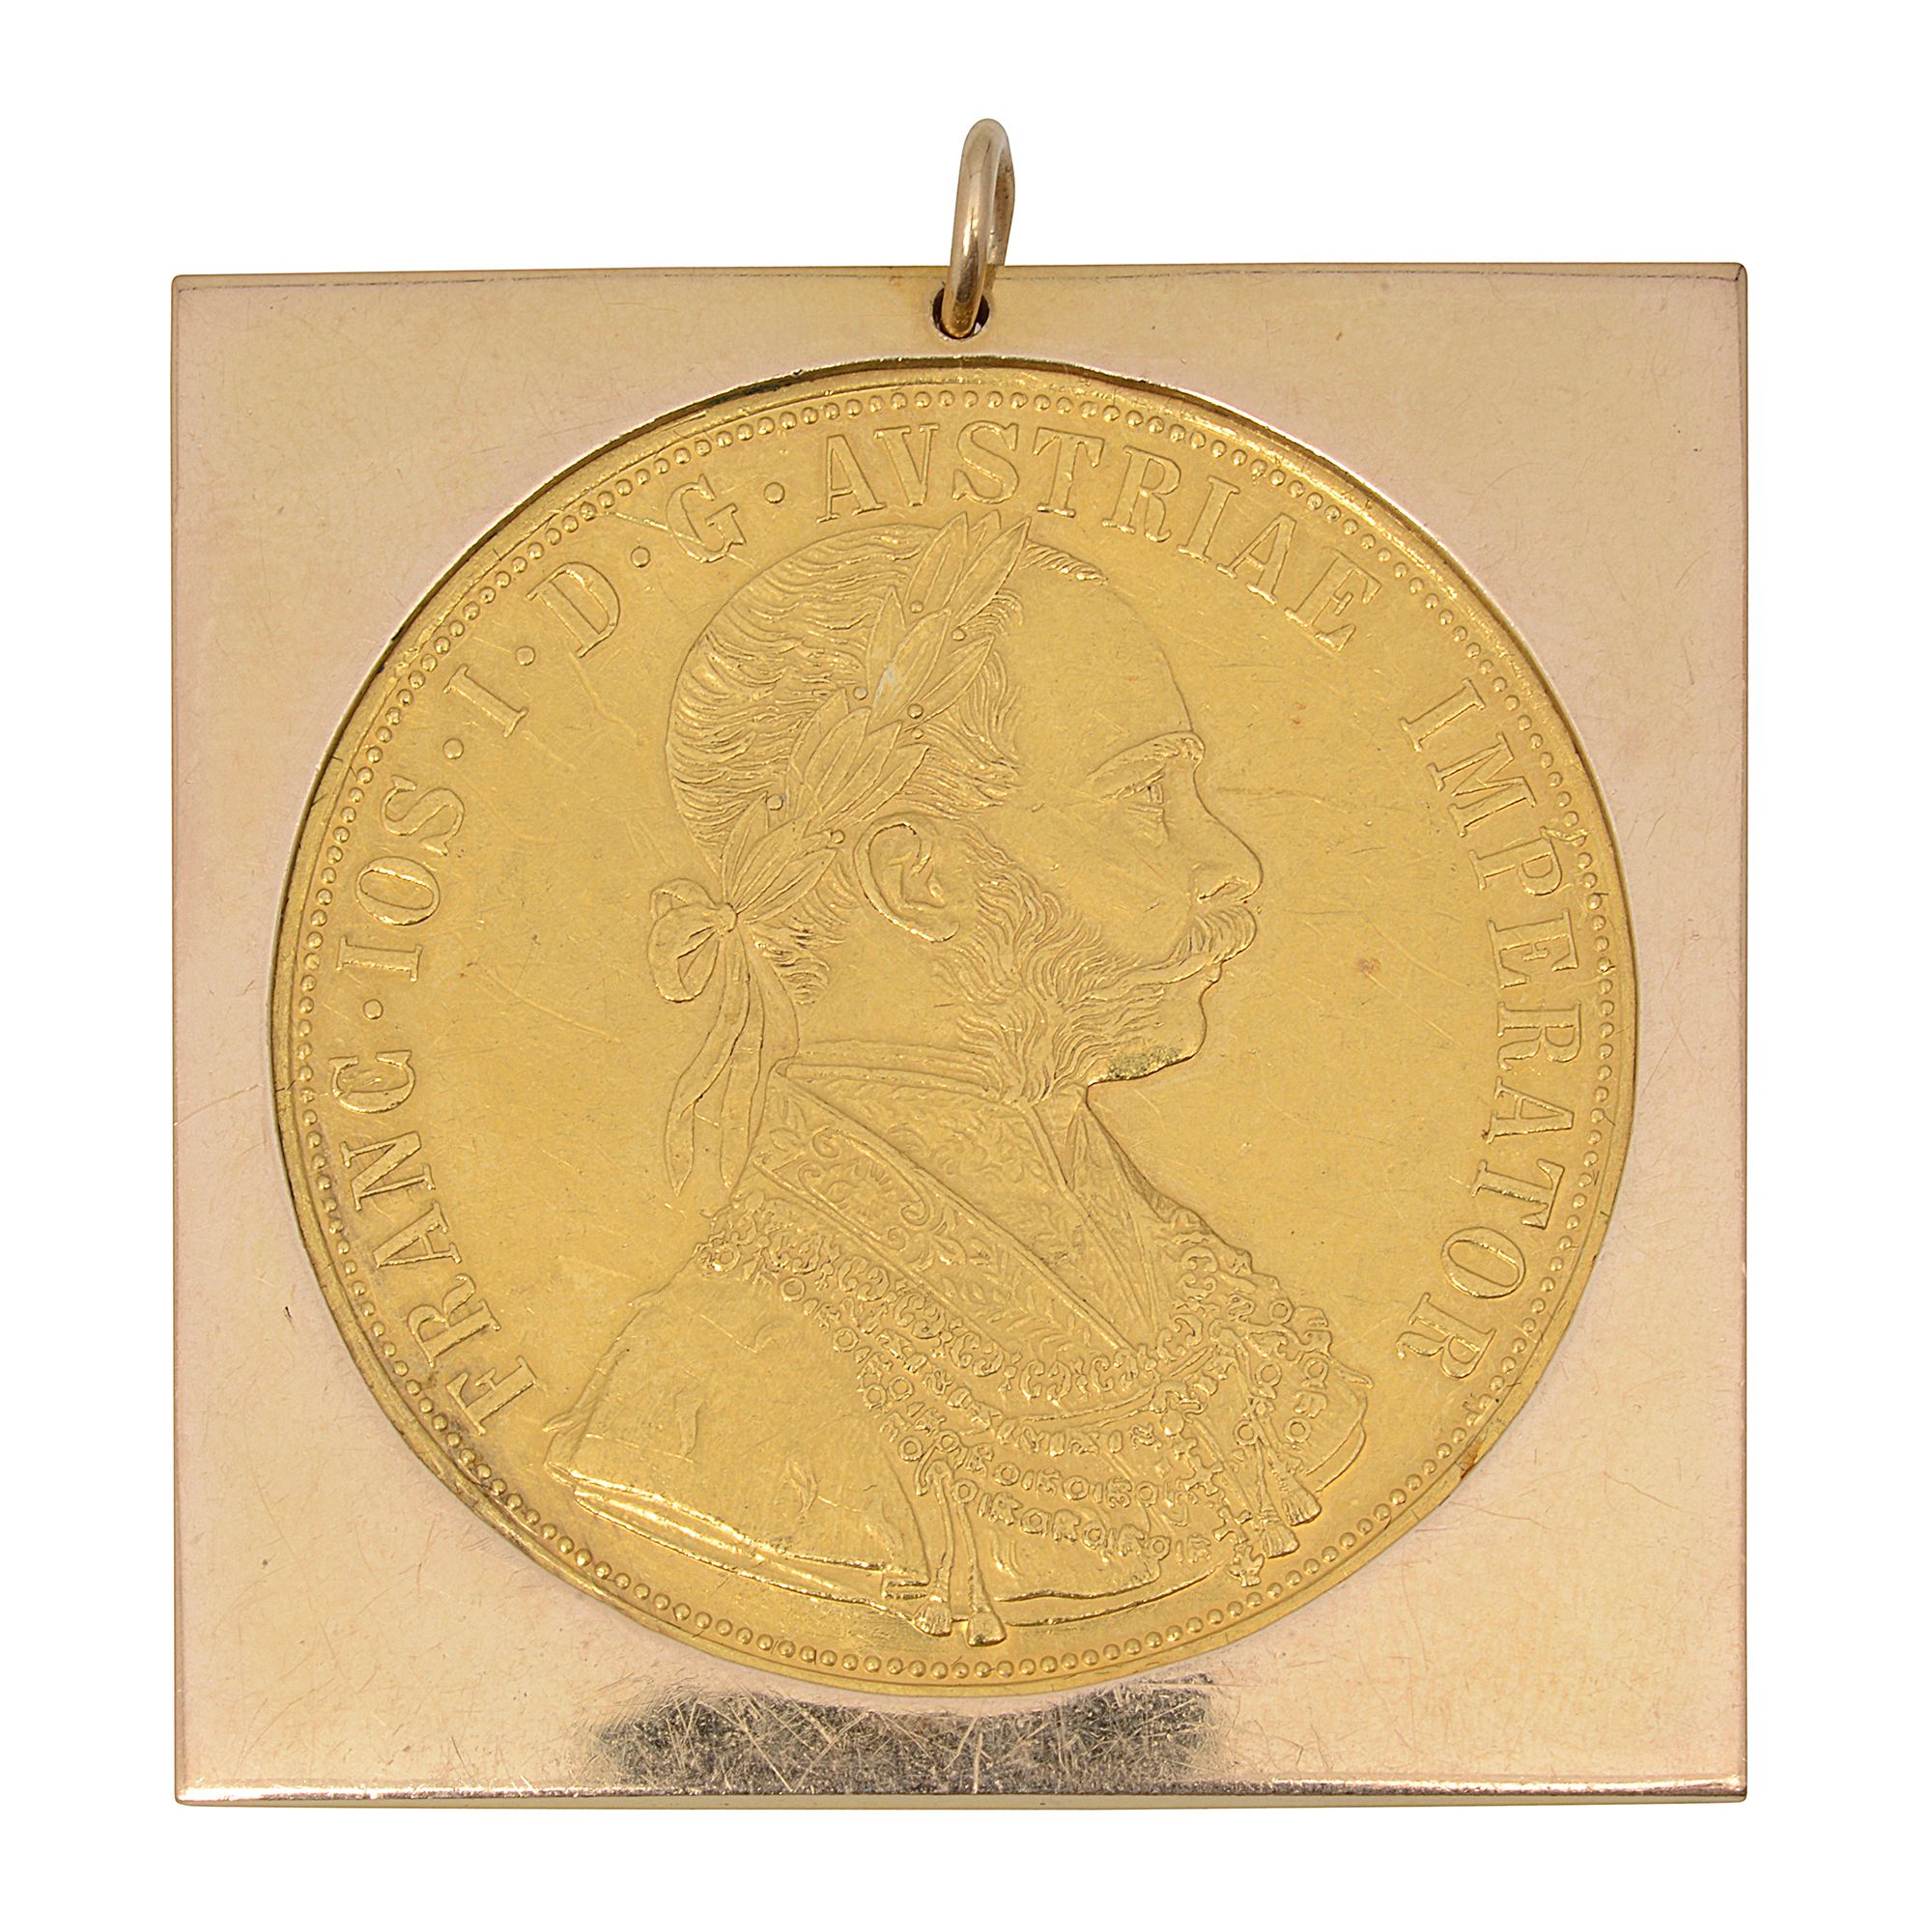 An Austrian four ducat gold coin mounted in a pendant